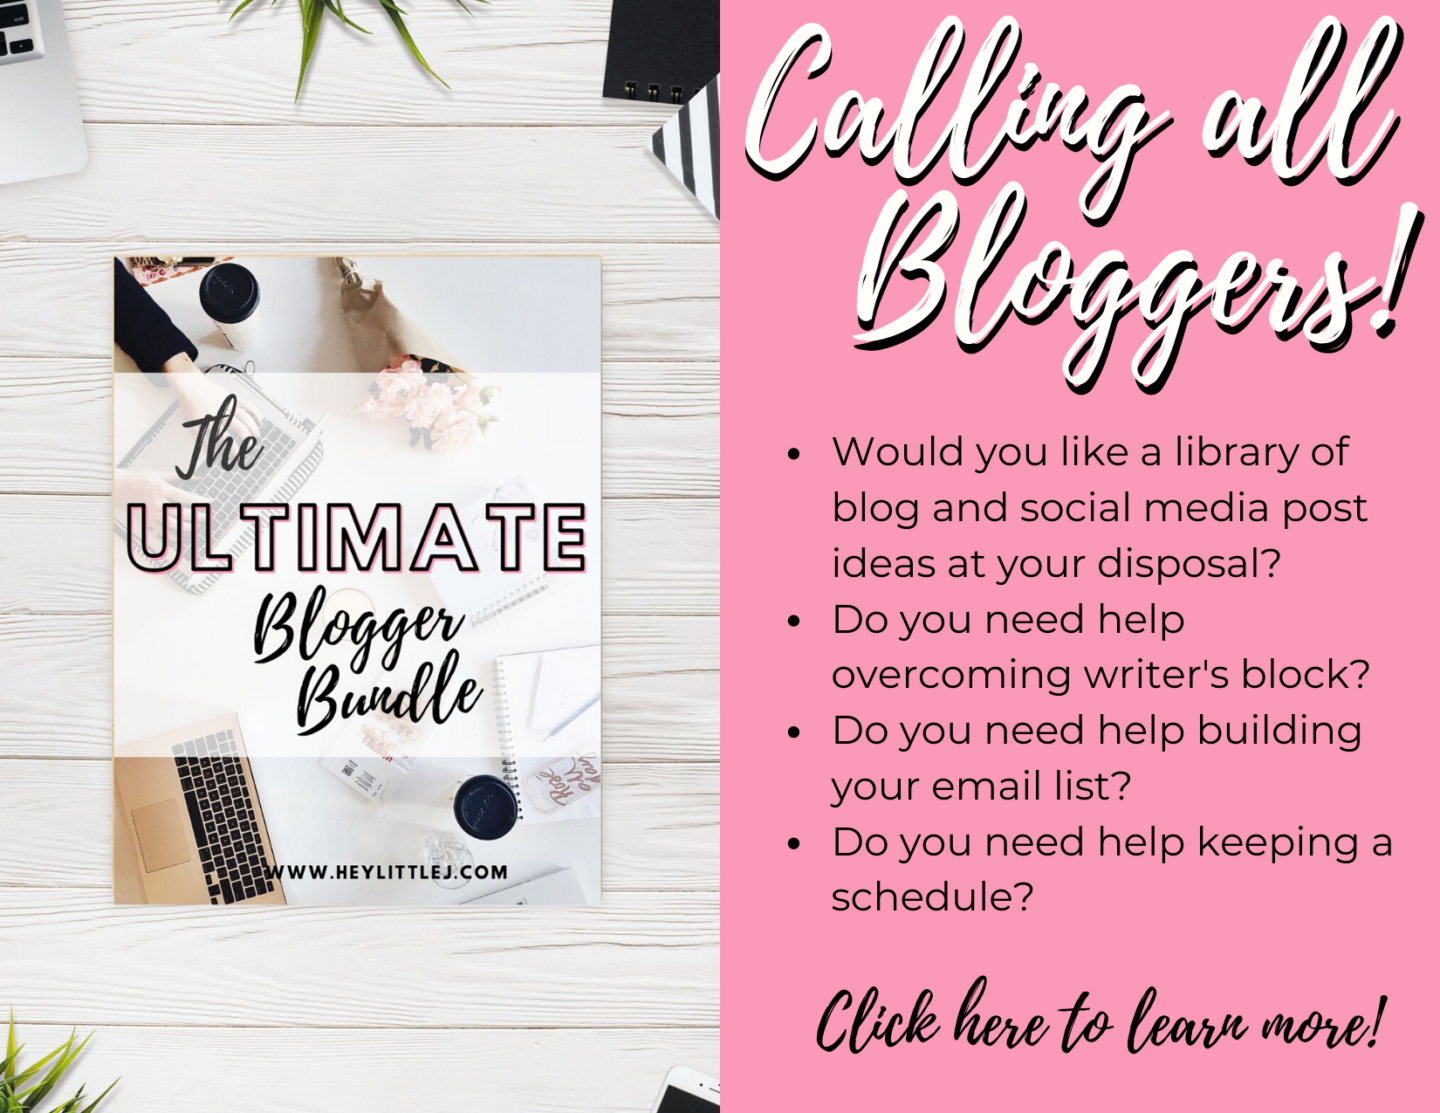 The ultimate blogger bundle!